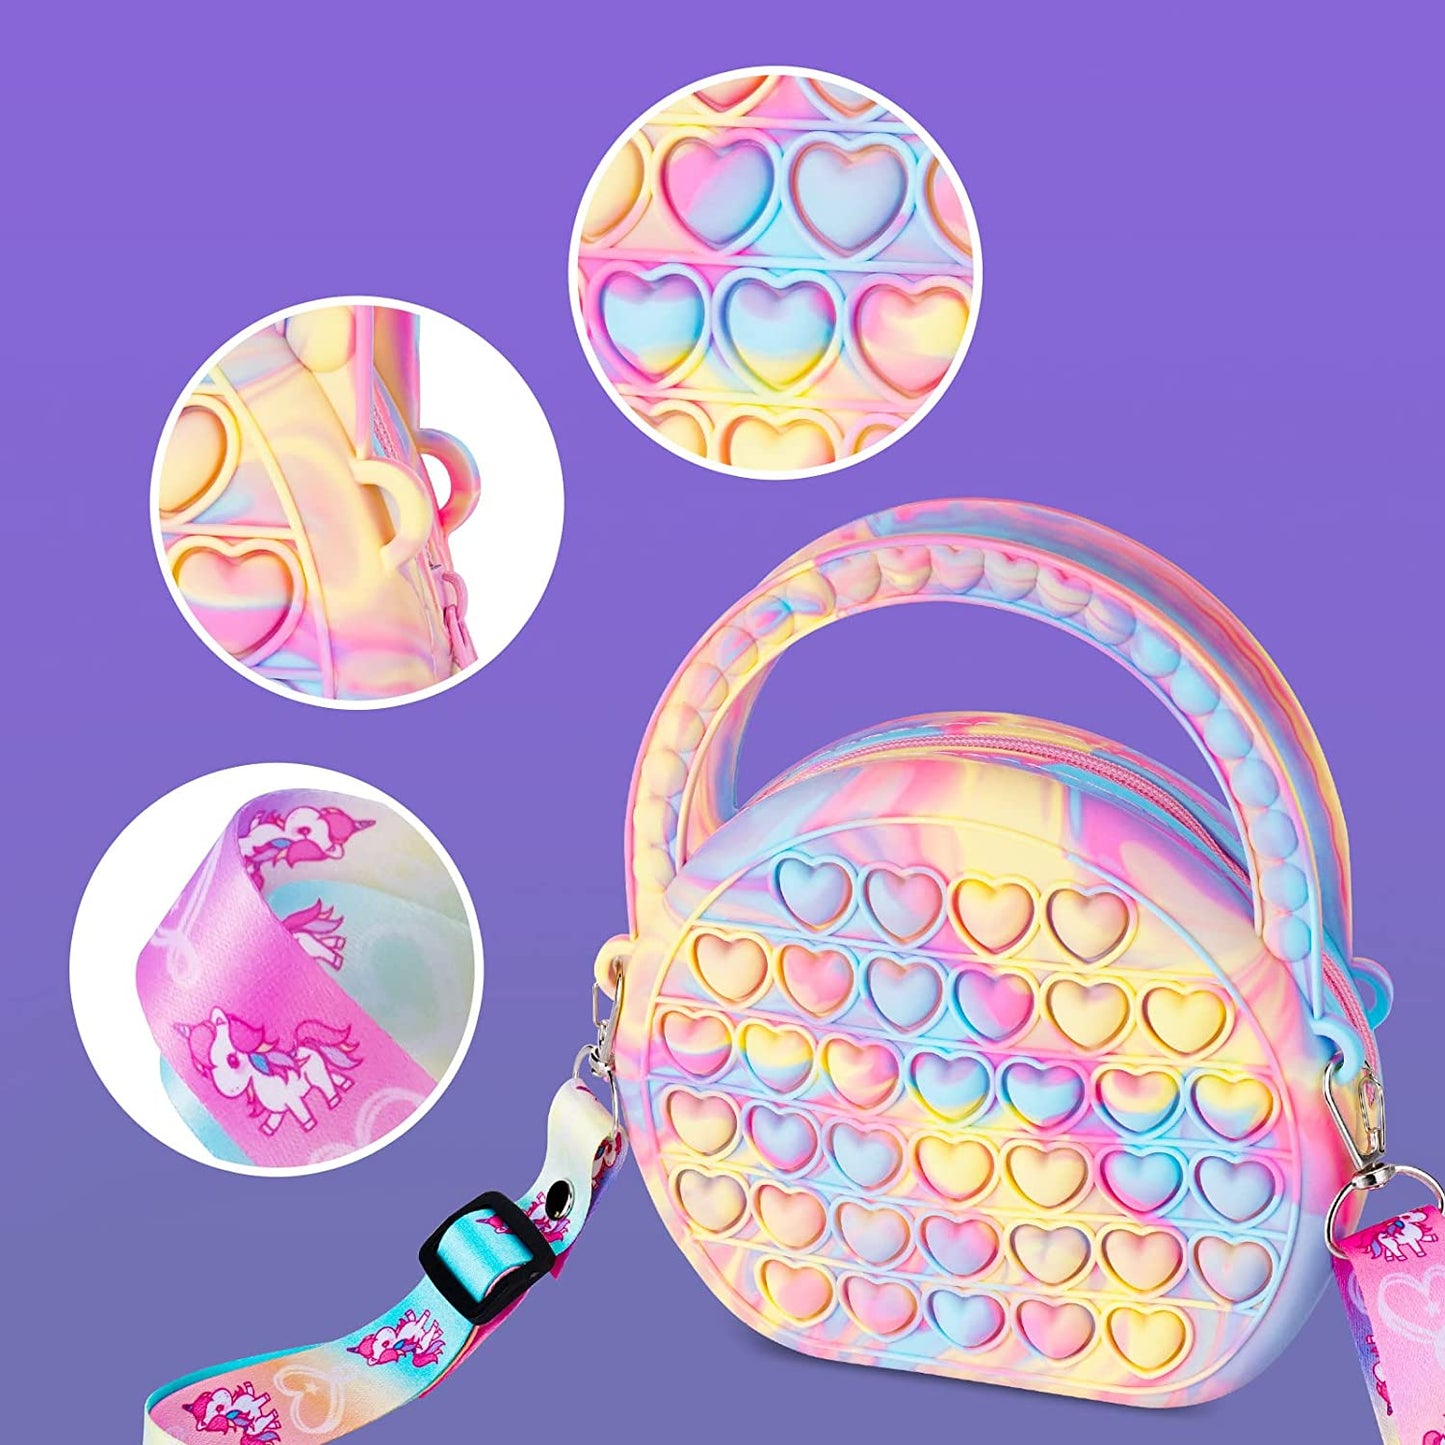 Mini Handbag Silicone Push Pop Fidget Sensory Toy Heart Bubble Rainbow Colors